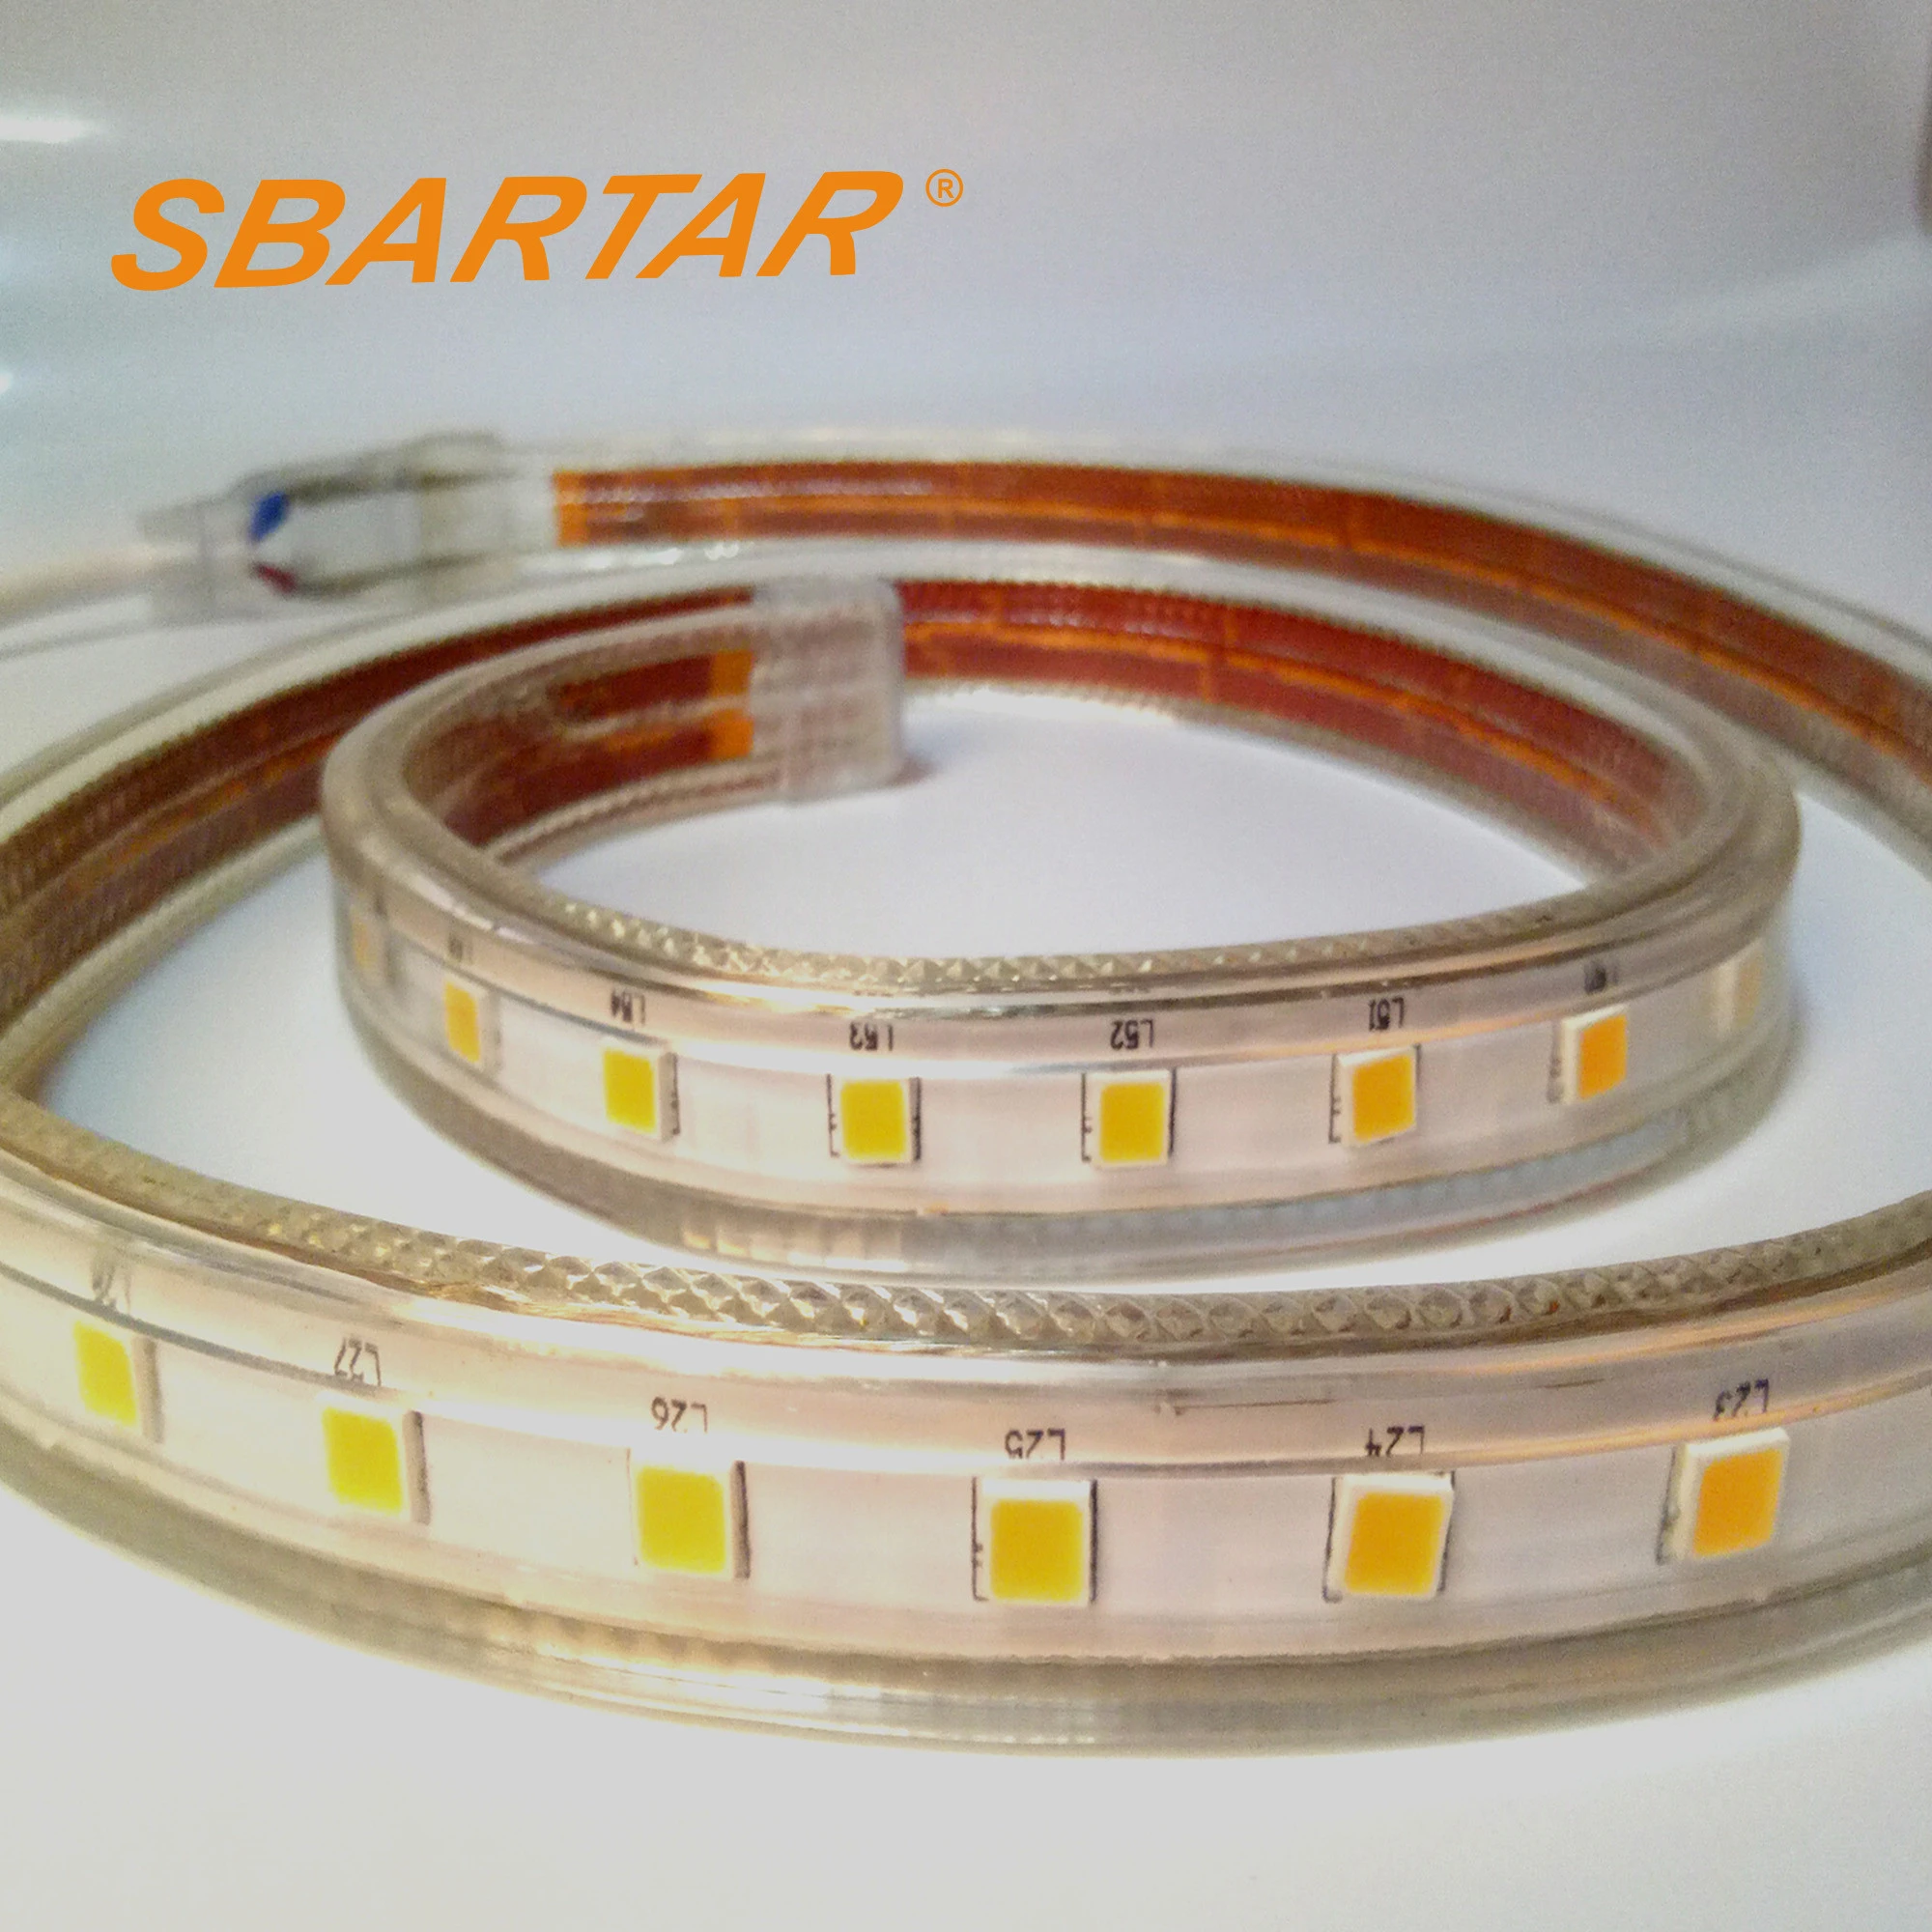 LED Strip Light Waterproof LED Tape AC 110V SMD 5054 60LED Flexible LED Light strip with a patent of Sbartar